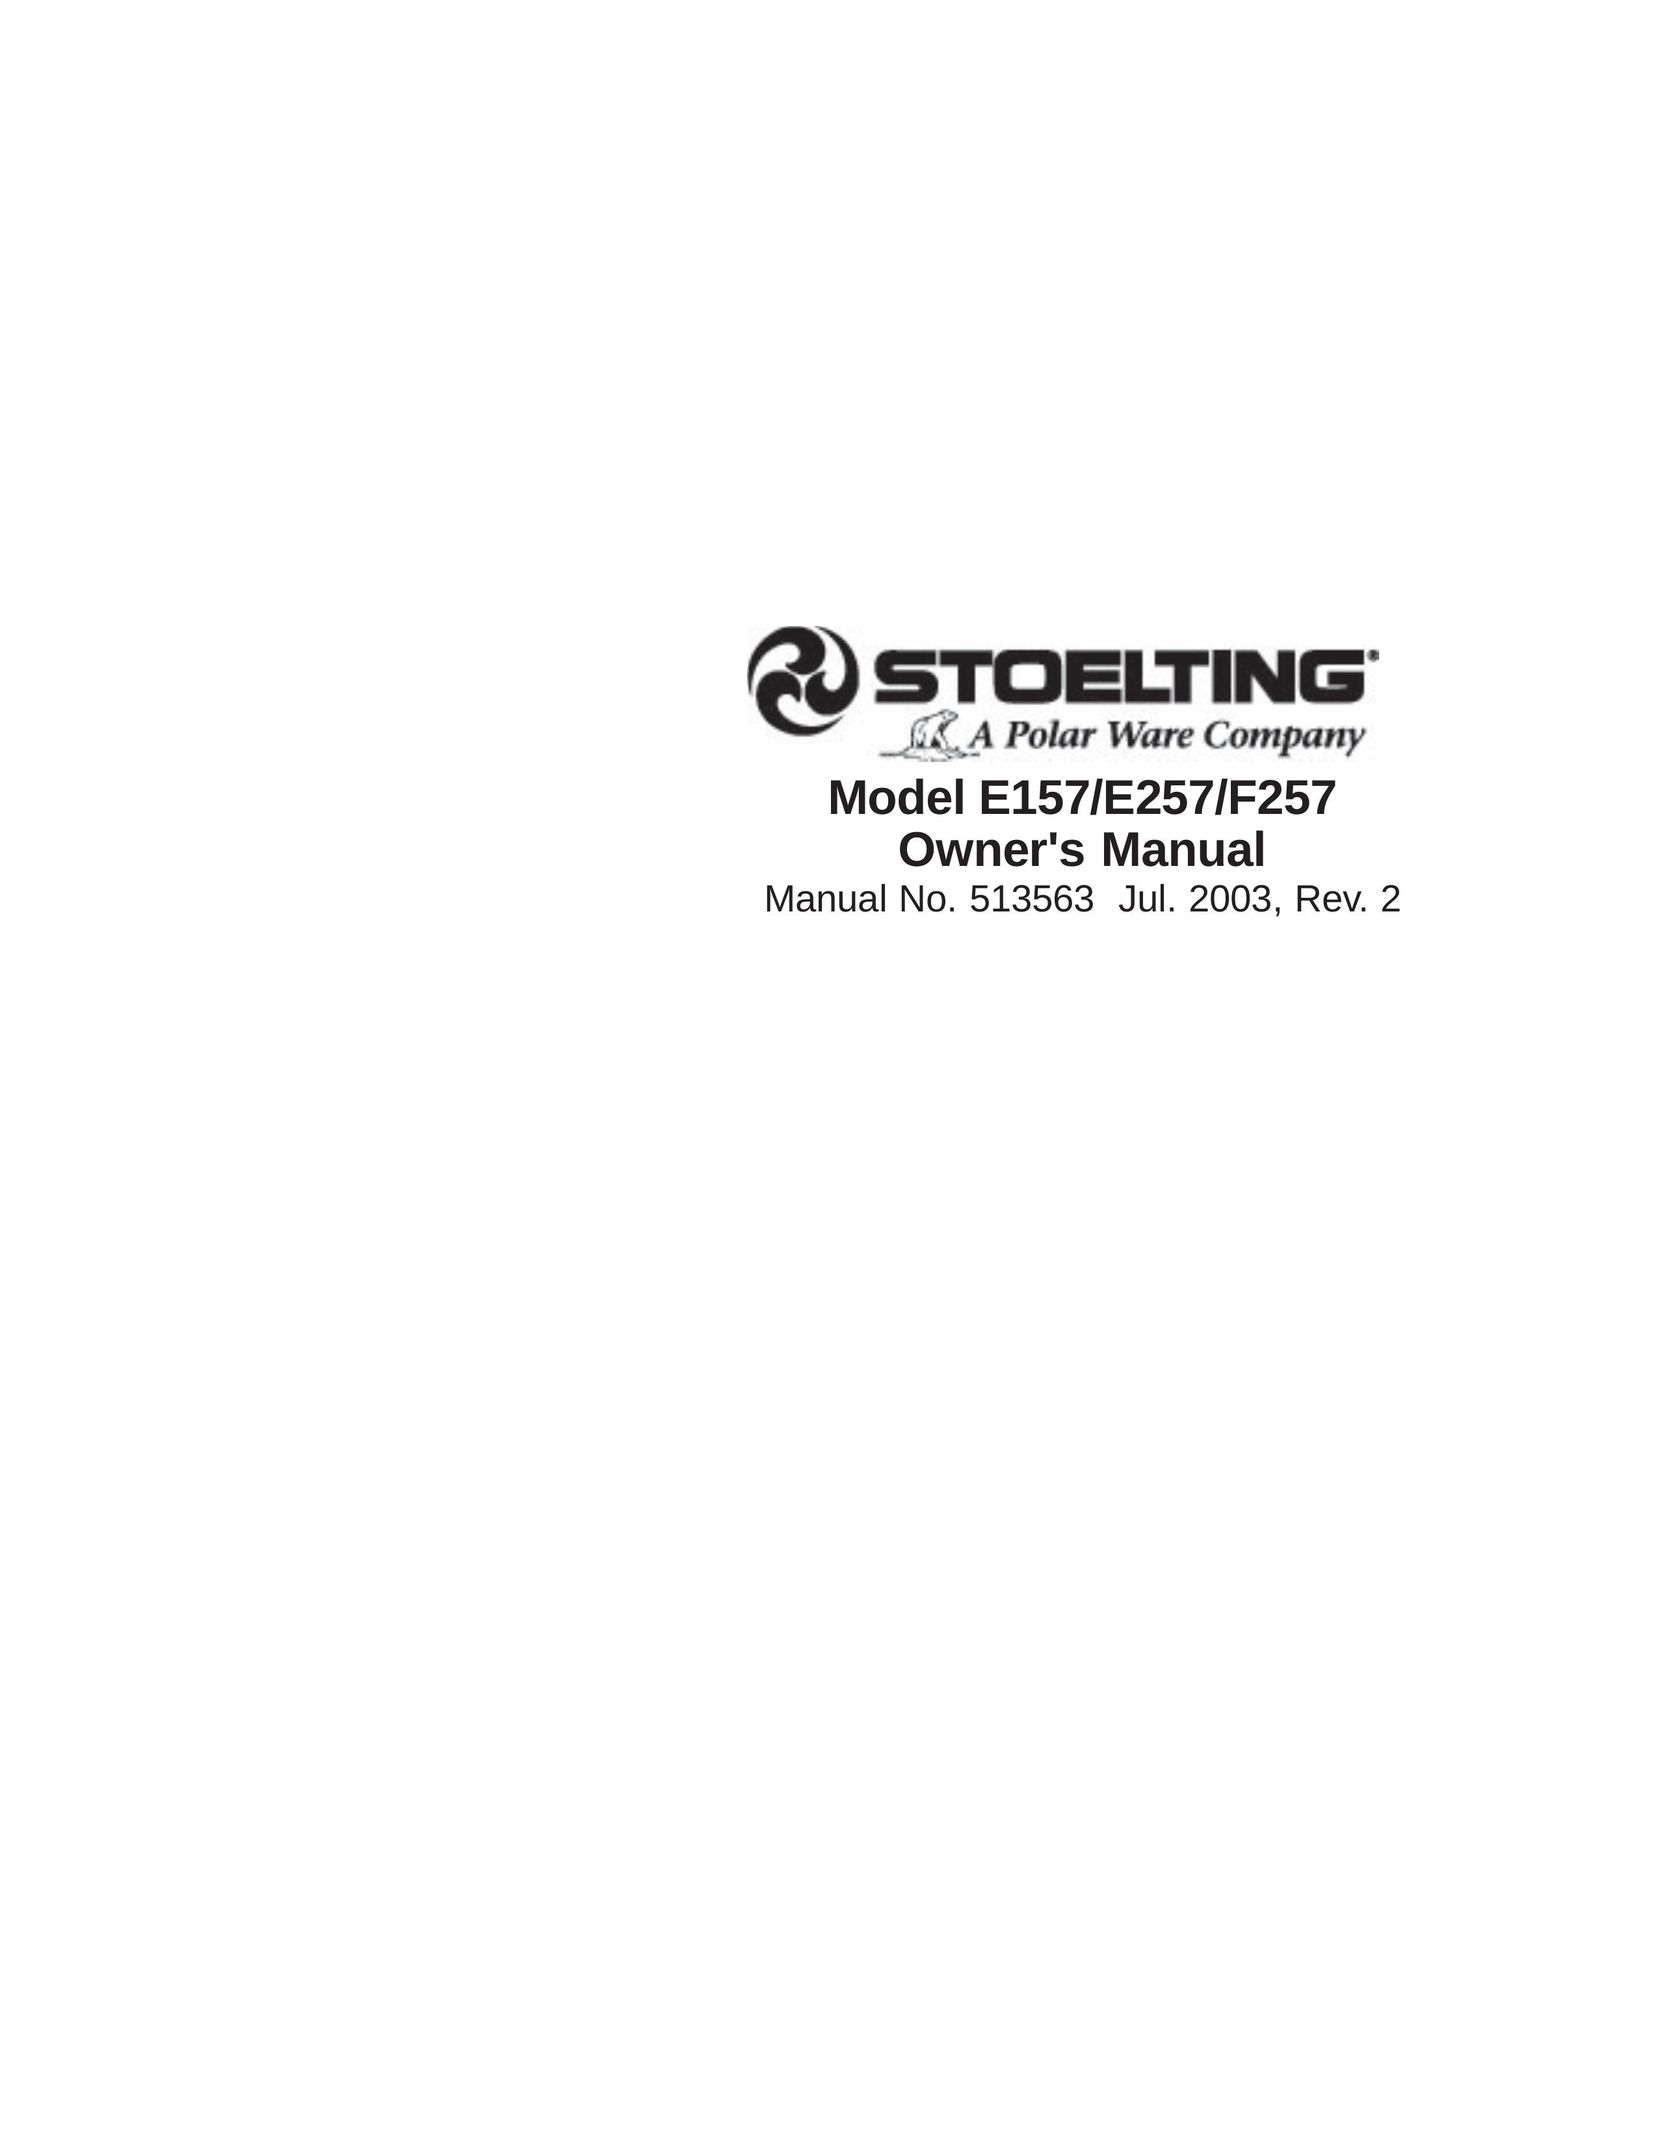 Stoelting E257 Freezer User Manual